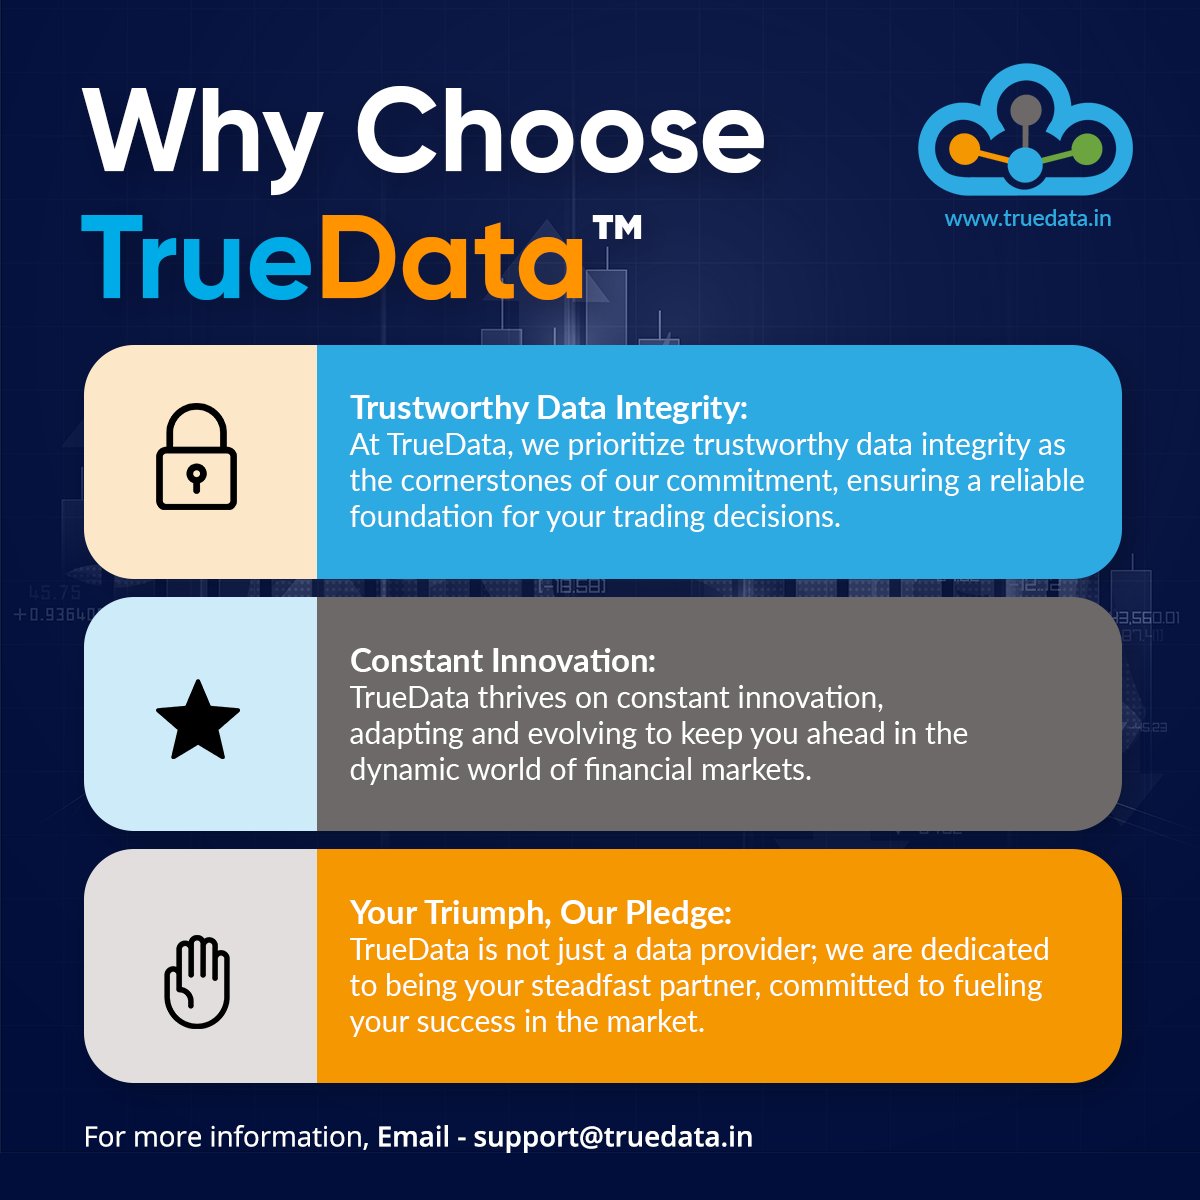 💁‍♀️Why Choose TrueData
- Trustworthy Data Integrity
- Constant Innovation
- Your Triumph, Our Pledge
- Unmatched Reliability
Know More: truedata.in
#TrueData #optiondecoder #velocity #AnalysisSoftware #stockmarket #trader #investing #realtimedata #nsedata #mcxdata